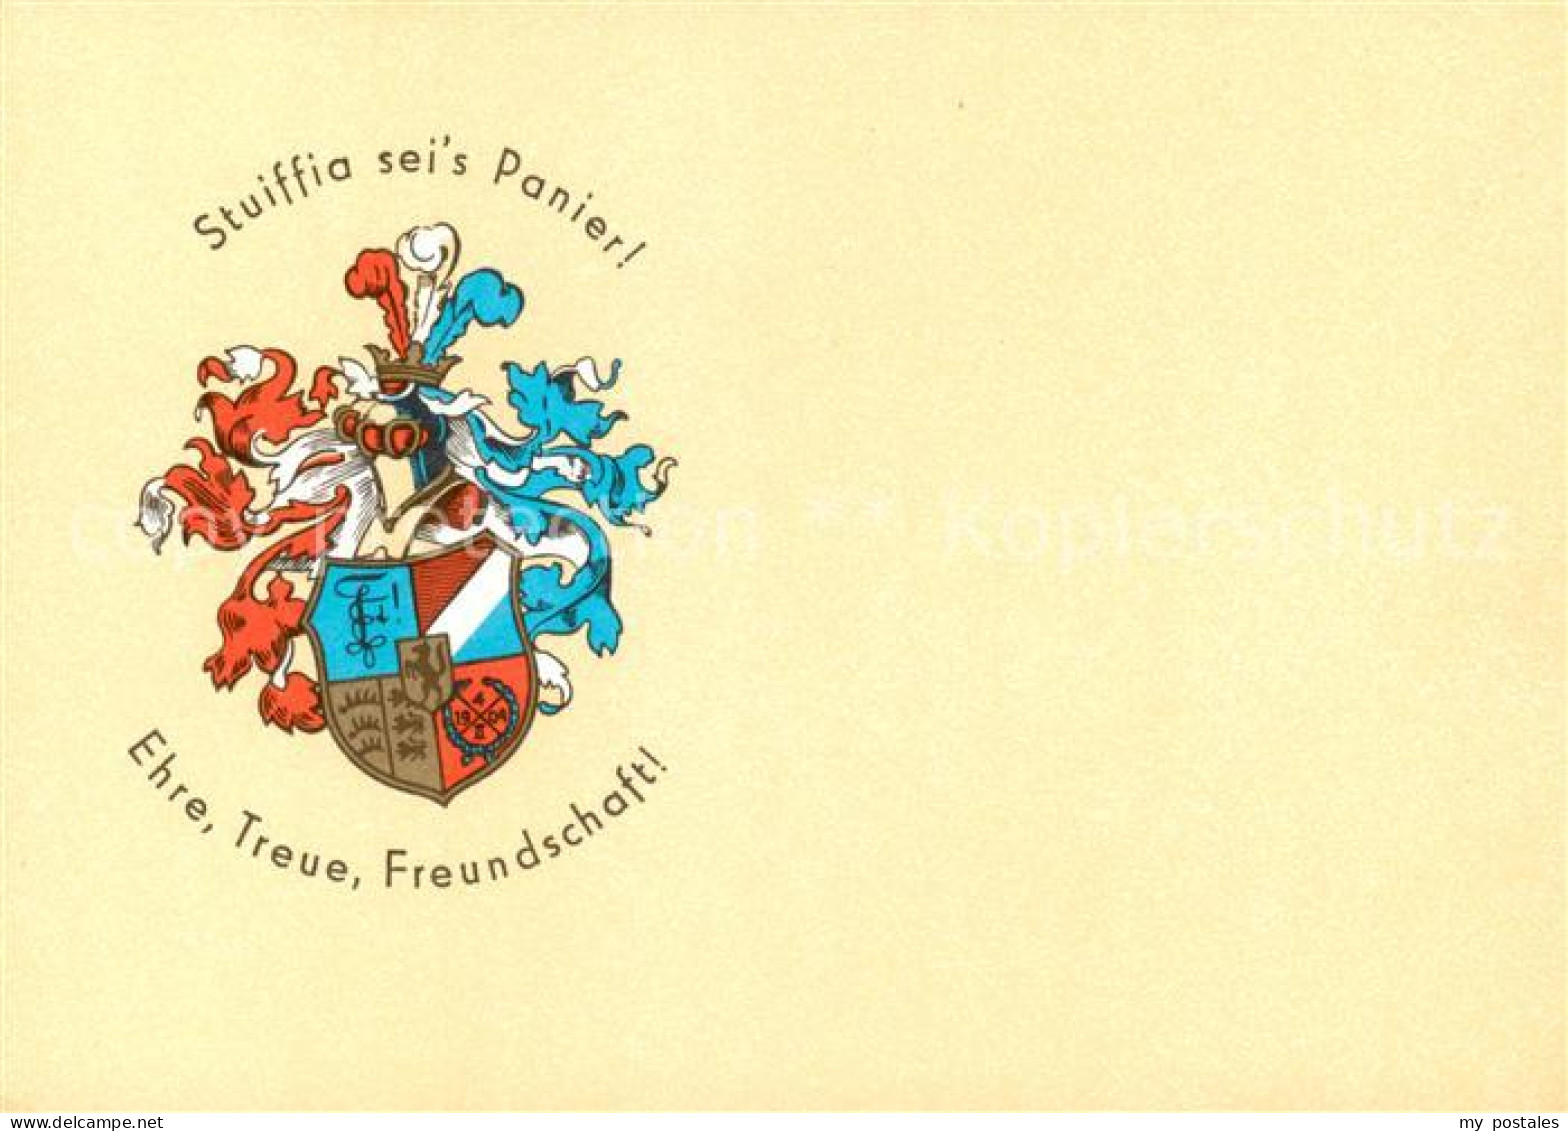 73853636 Stuttgart Stuiffa Sei’s Panier Wappen Stuttgart - Stuttgart